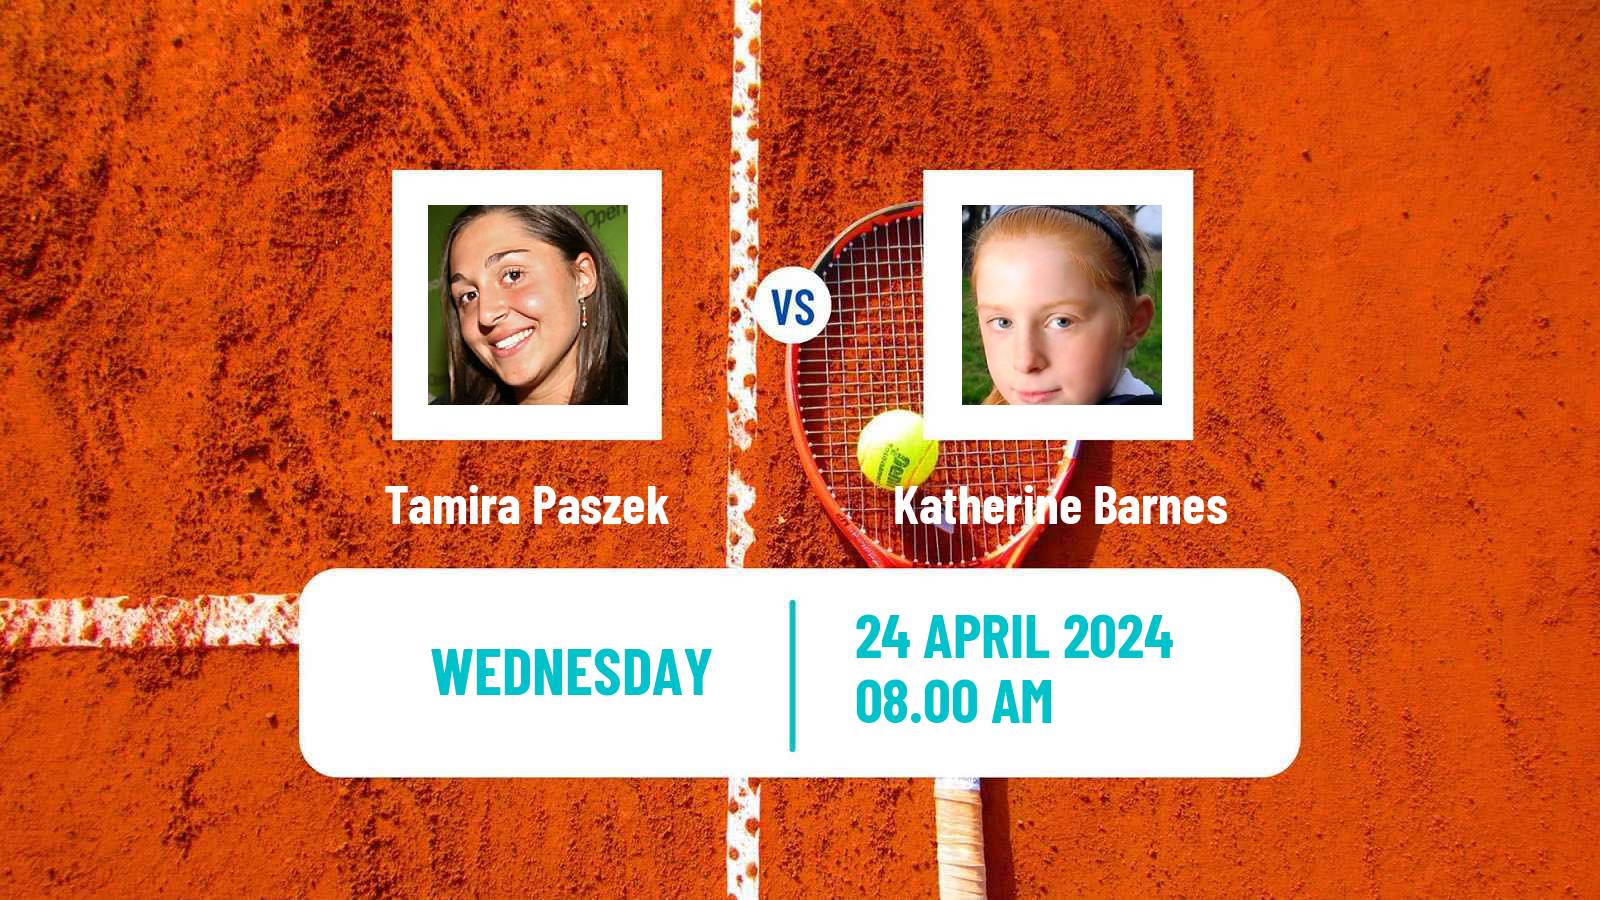 Tennis ITF W35 Nottingham Women Tamira Paszek - Katherine Barnes